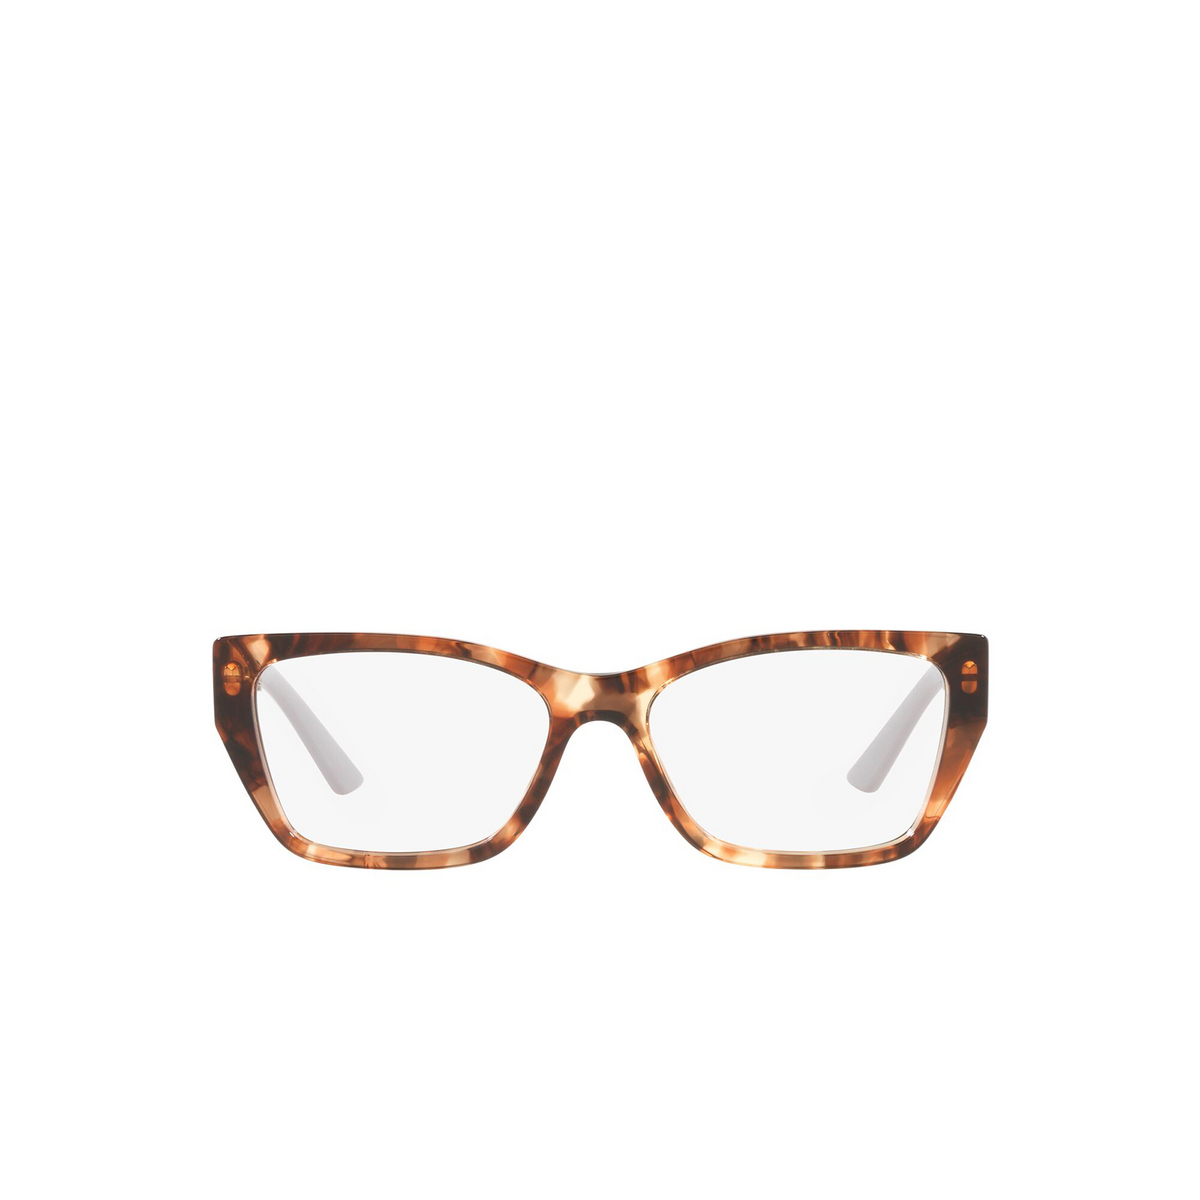 Prada® Square Eyeglasses: PR 11YV color Caramel Tortoise 07R1O1 - front view.